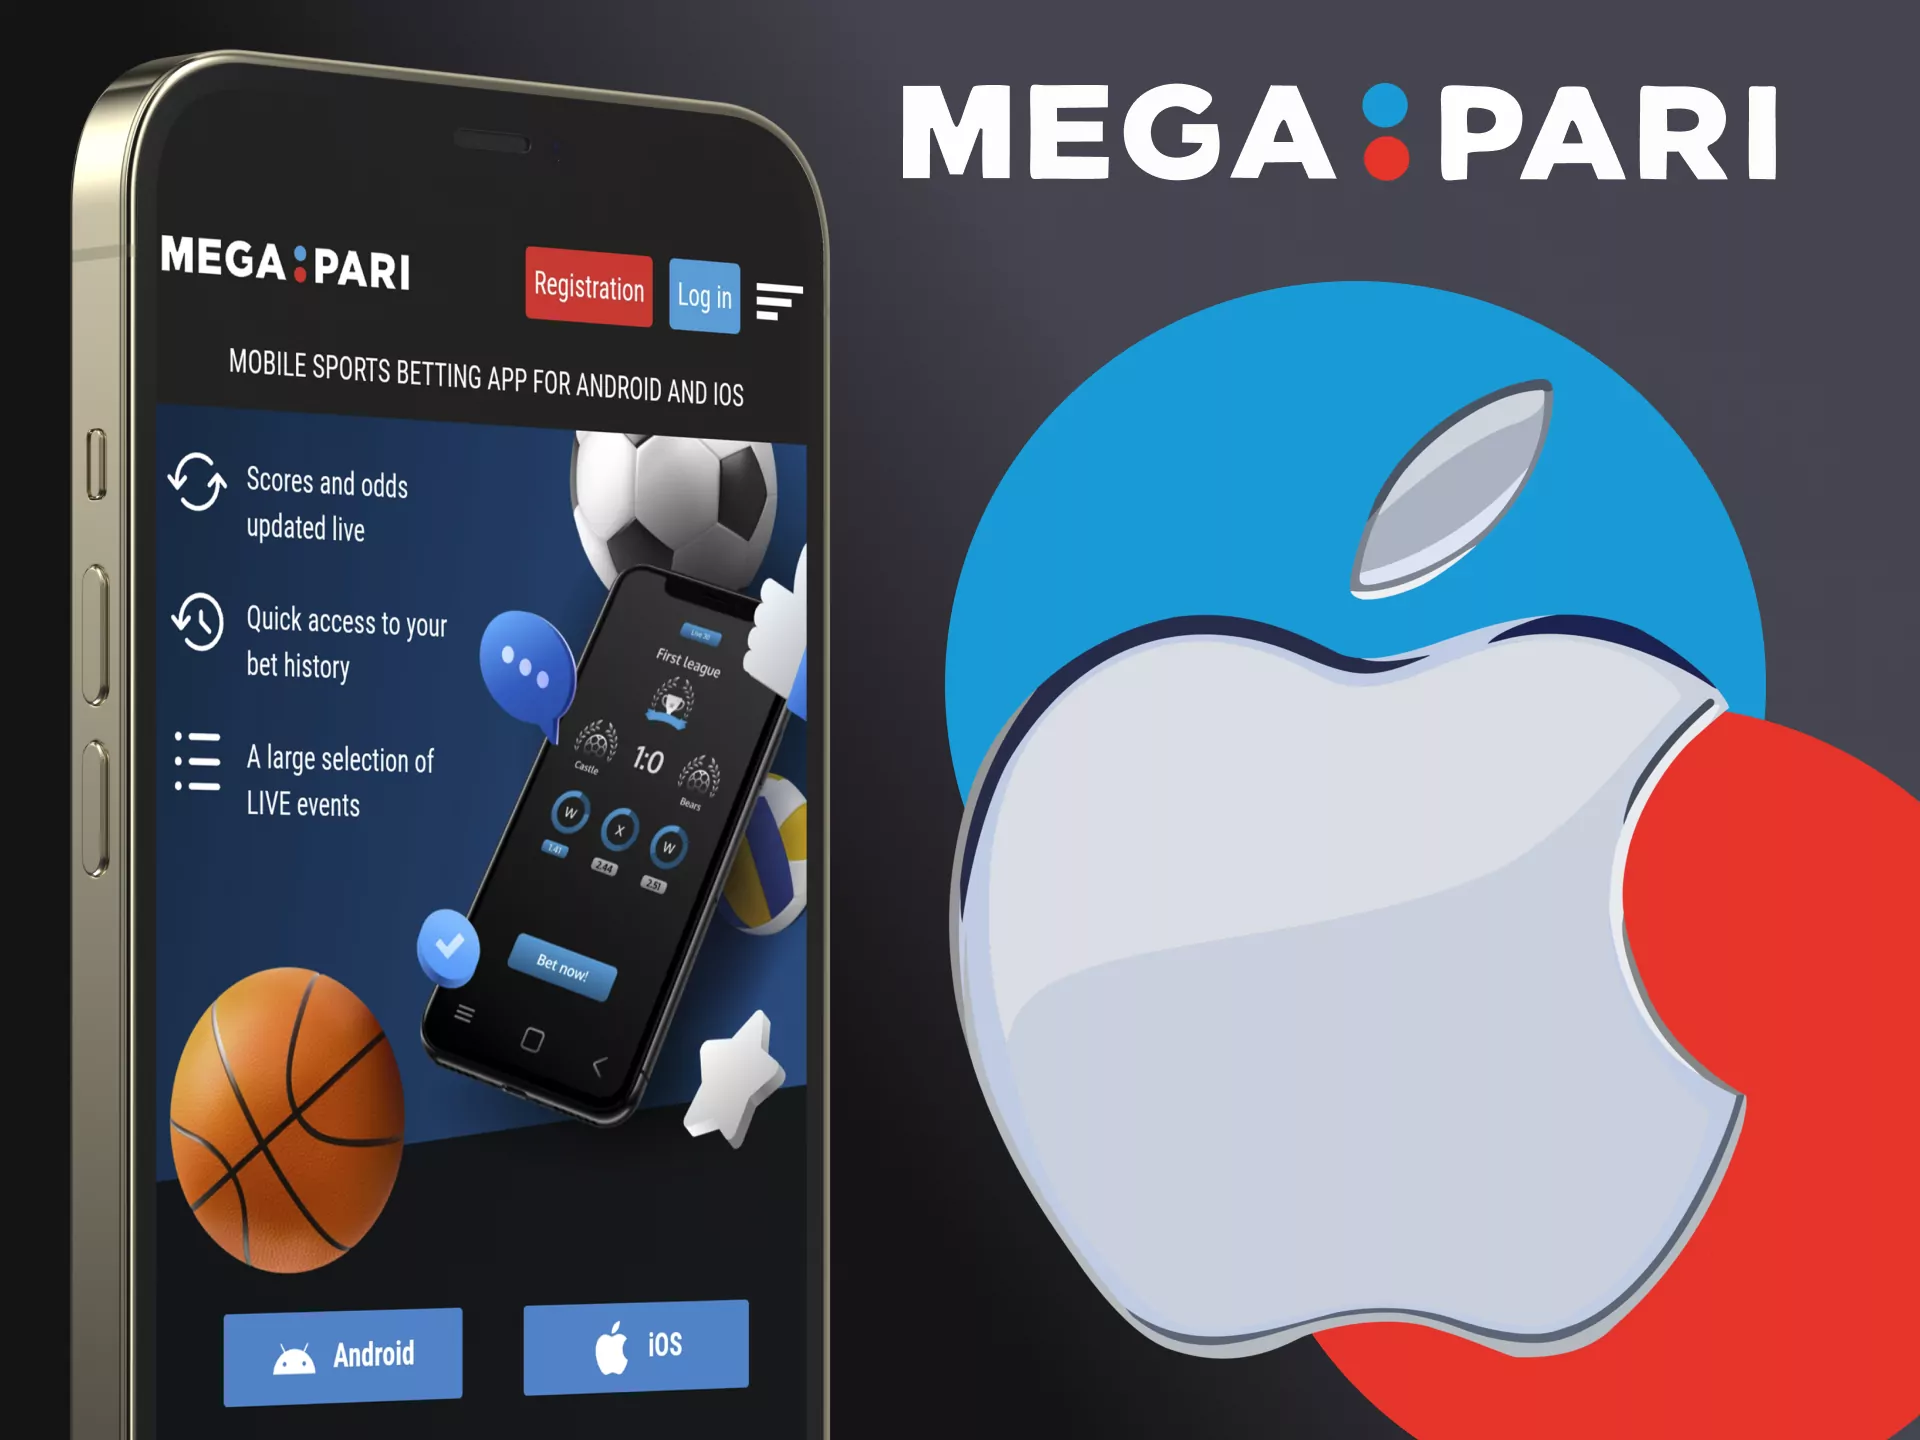 Install the Megapari app for your iOS device.